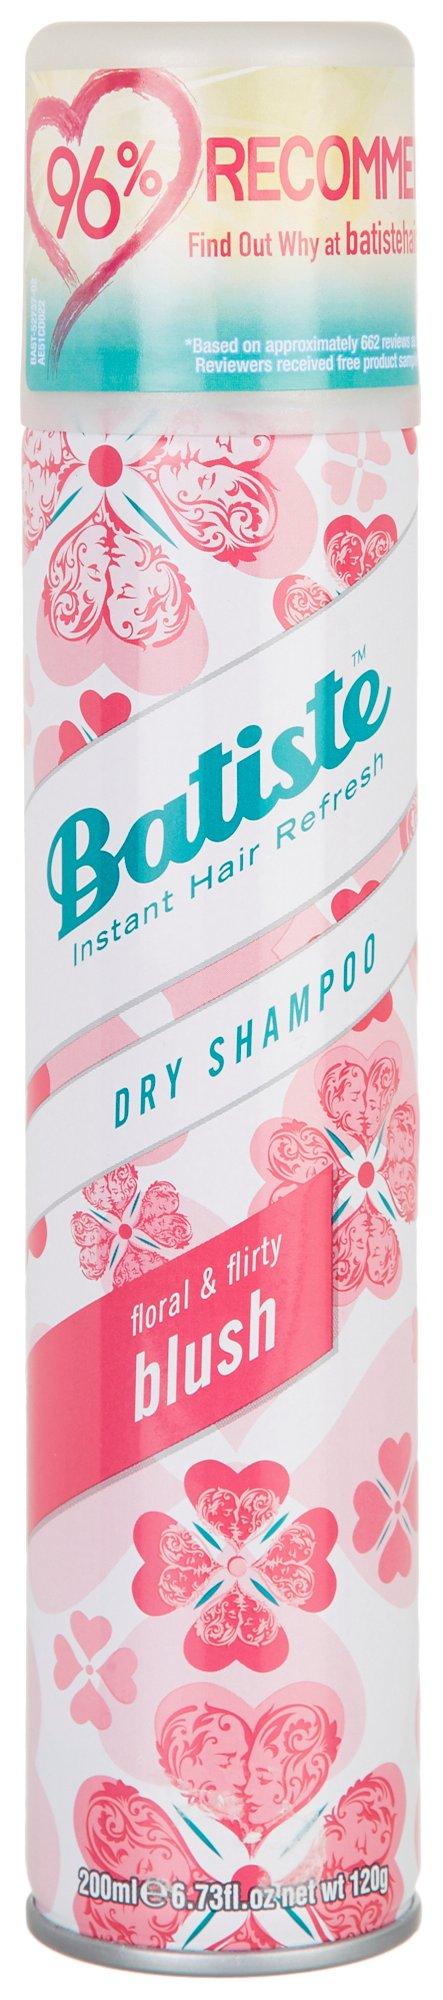 Batiste Floral Flirty Blush Dry Shampoo 6.7 fl oz